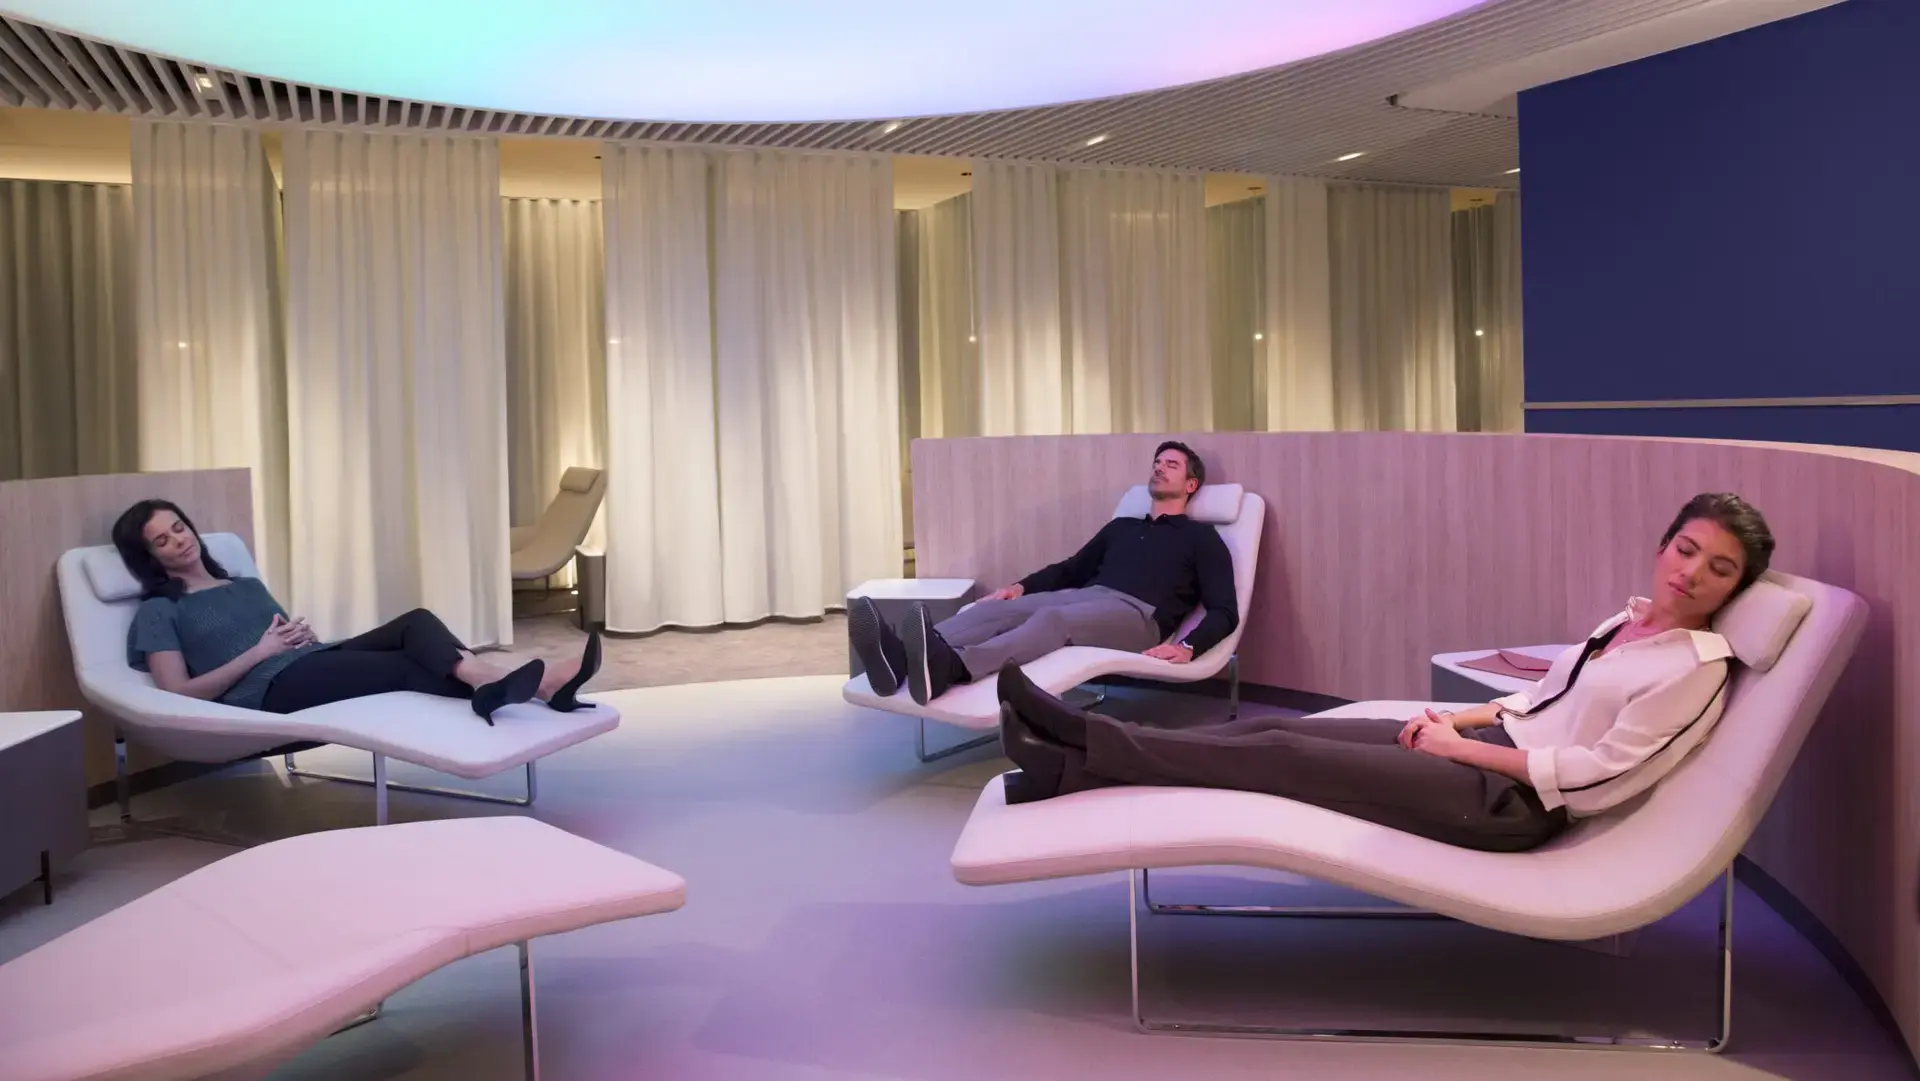 3 people sleeping at Air France - Business Lounge Charles de Gaulle, Paris